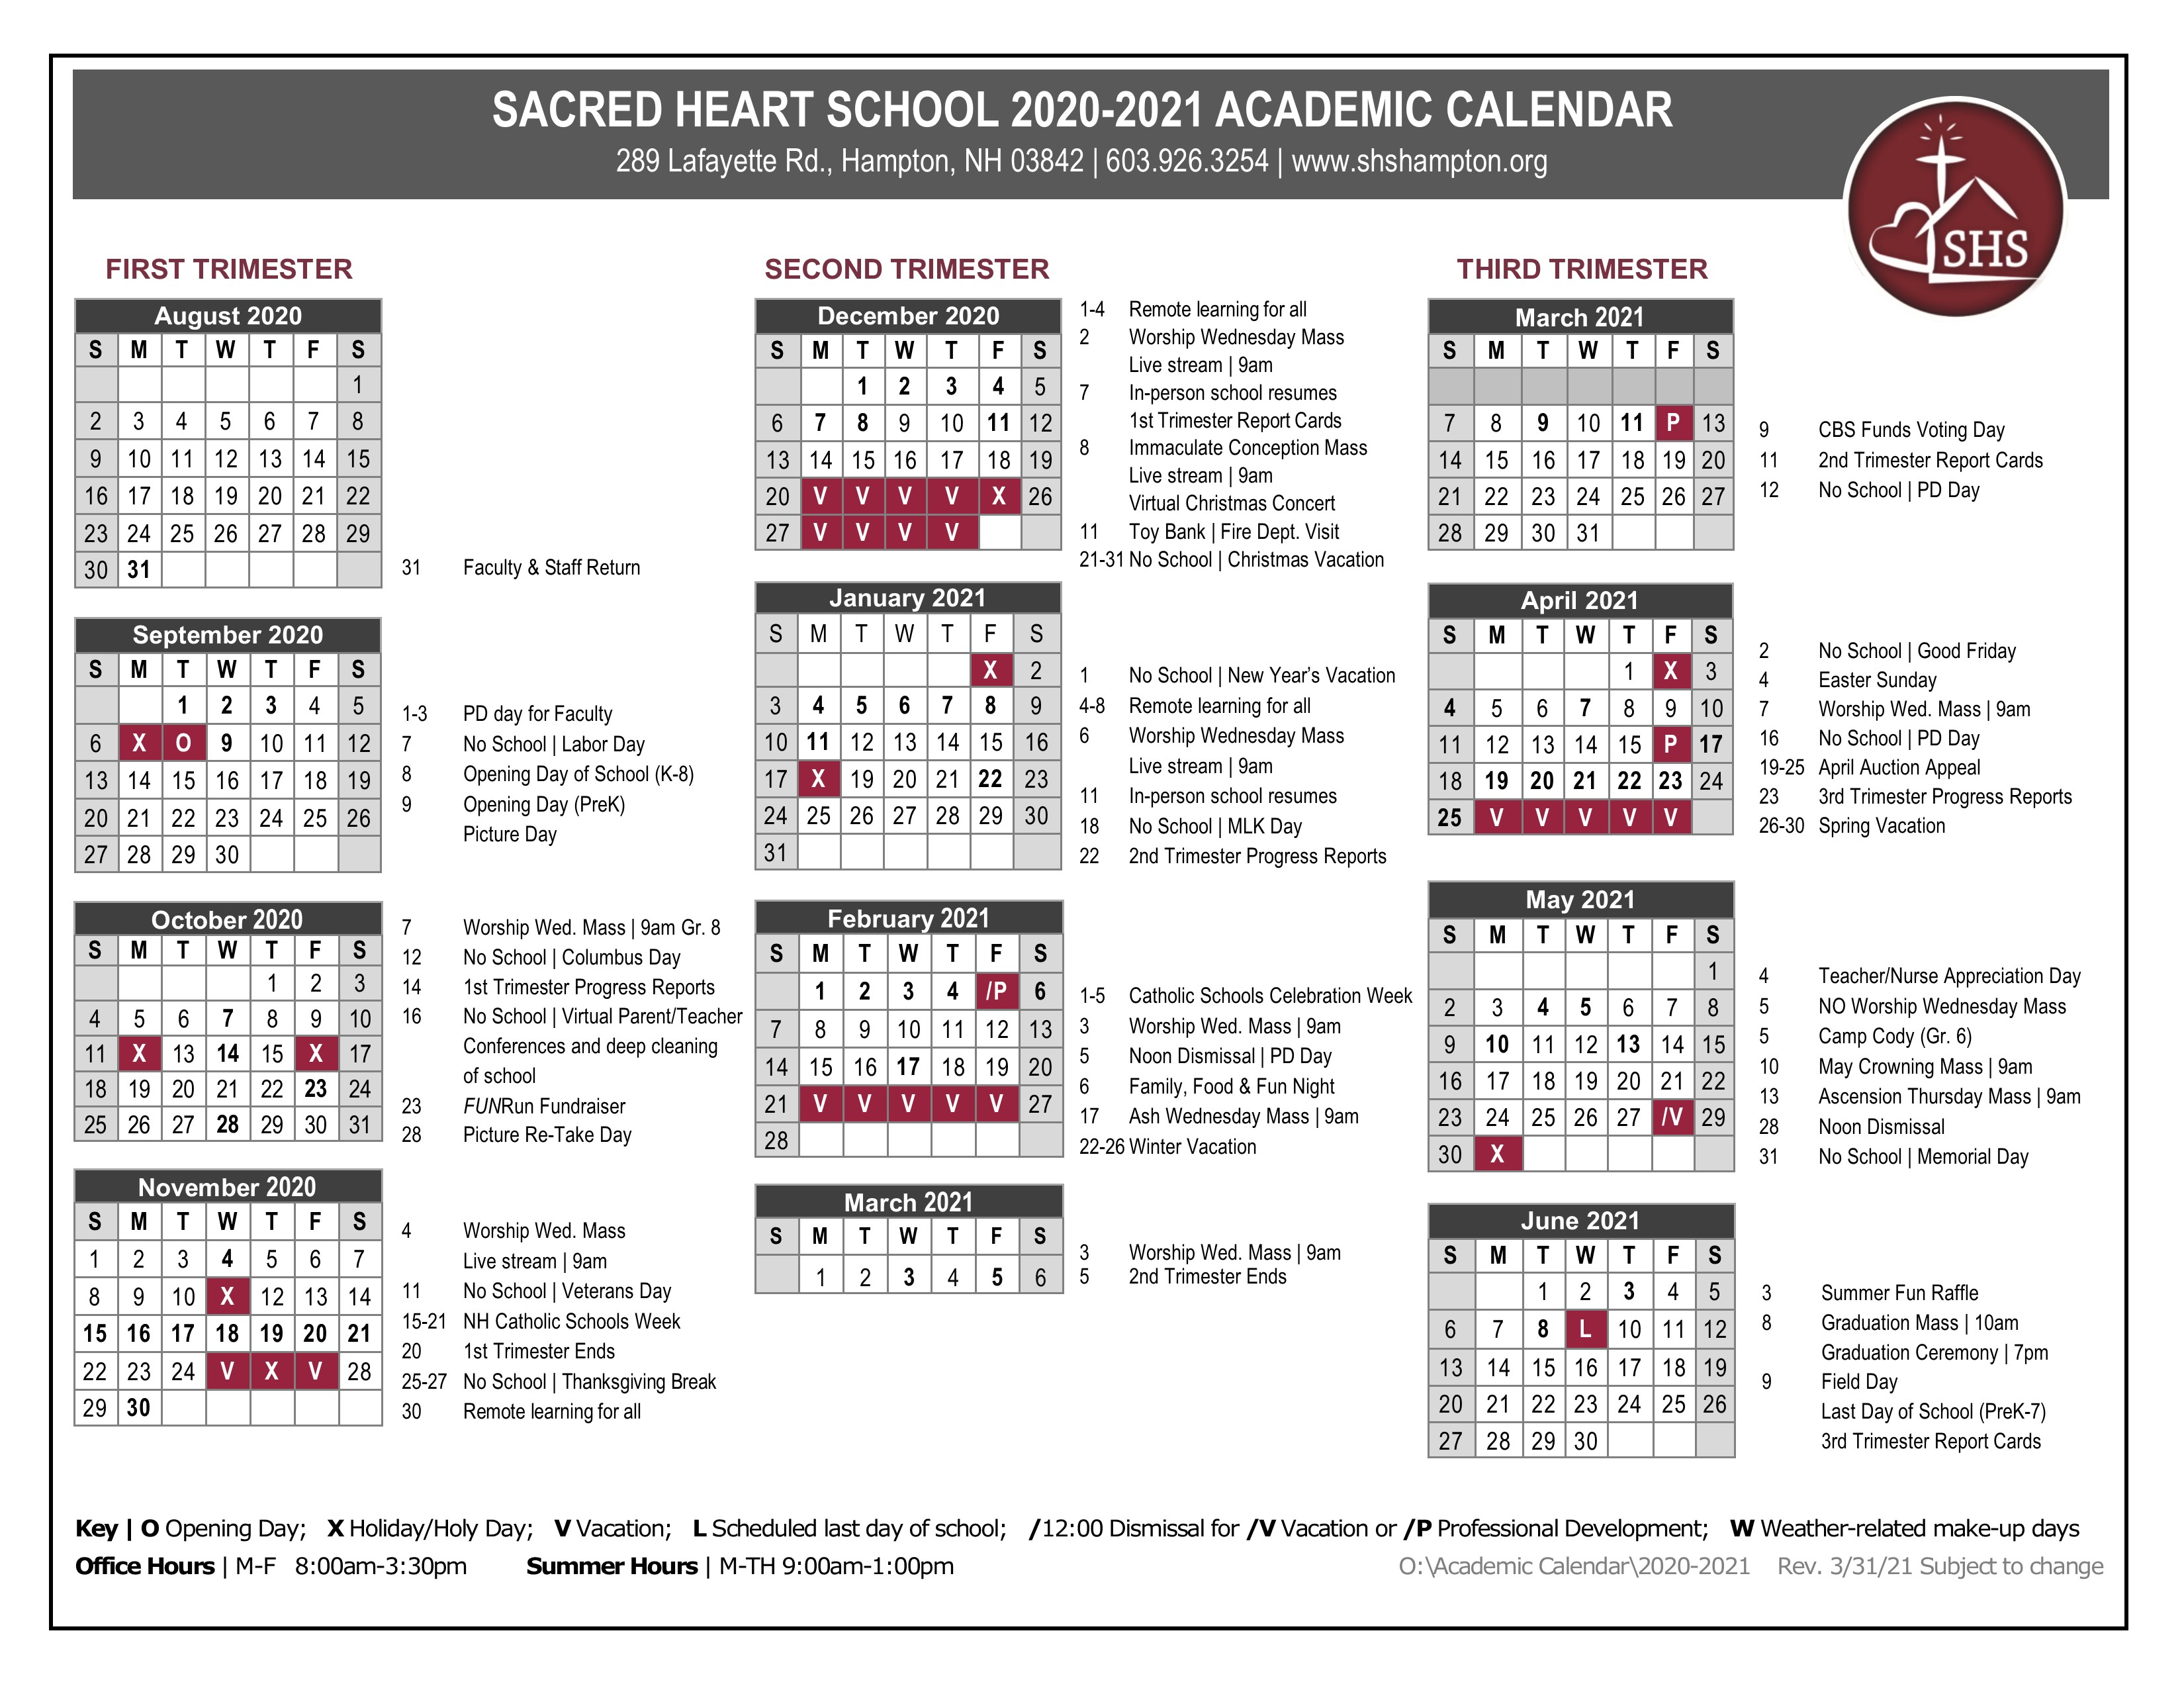 Colorado State Academic Calendar Customize And Print